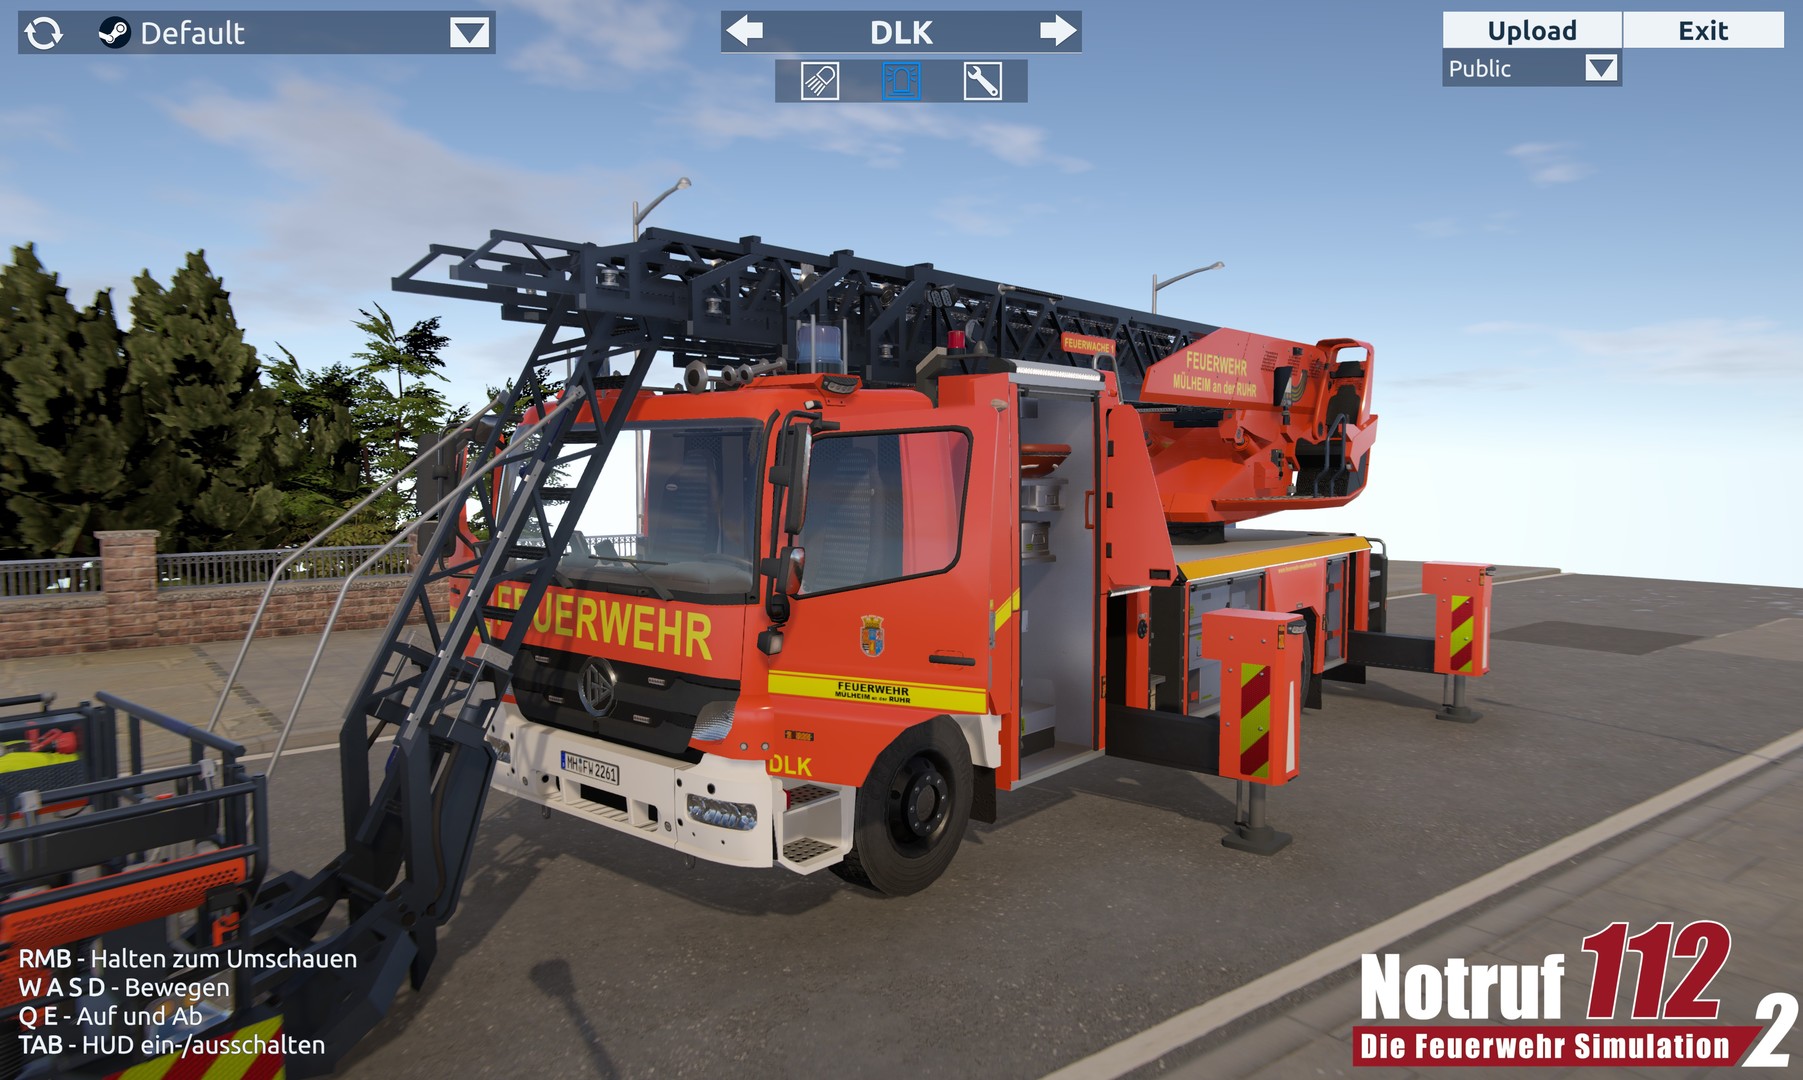 Notruf 112 - Die Feuerwehr Simulation 2: Showroom game revenue and